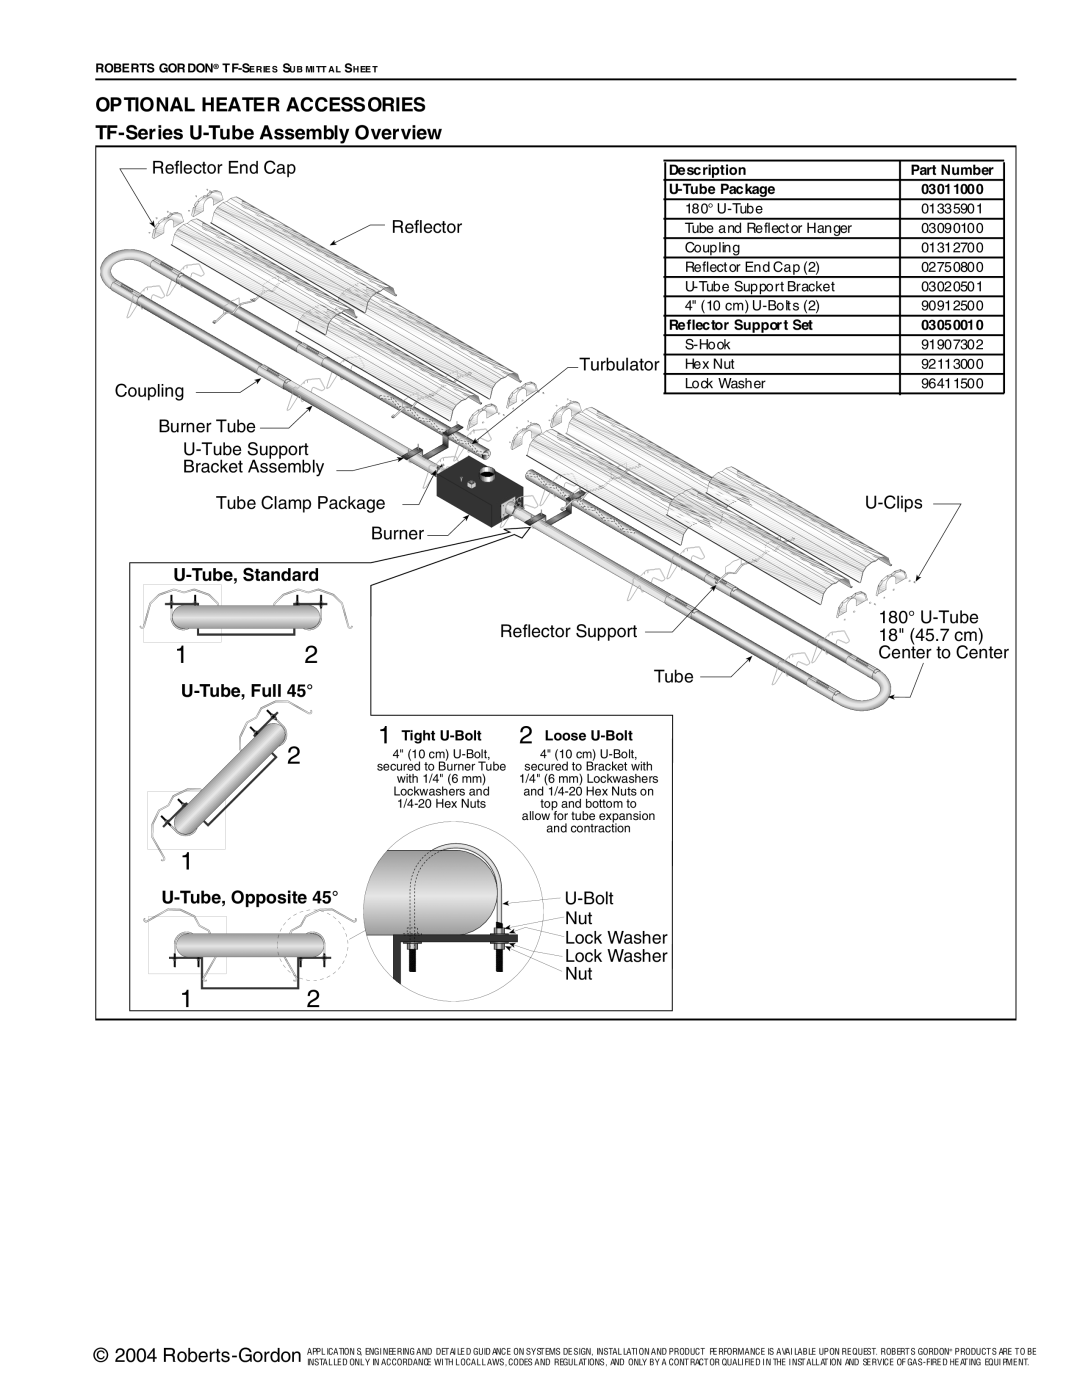 Roberts Gorden Optional Heater Accessories, TF-Series U-TubeAssembly Overview, U-Tube,Standard, U-Tube,Full 